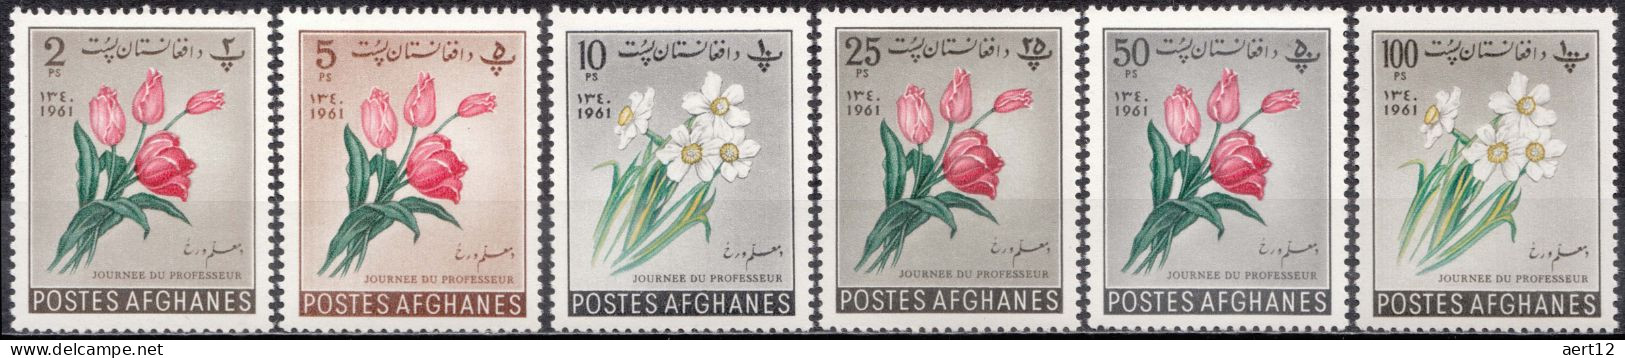 1961, Afghanistan, Teacher's Day, Tulips, Flowers, Plants, 6 Stamps, MNH(**) - Afganistán